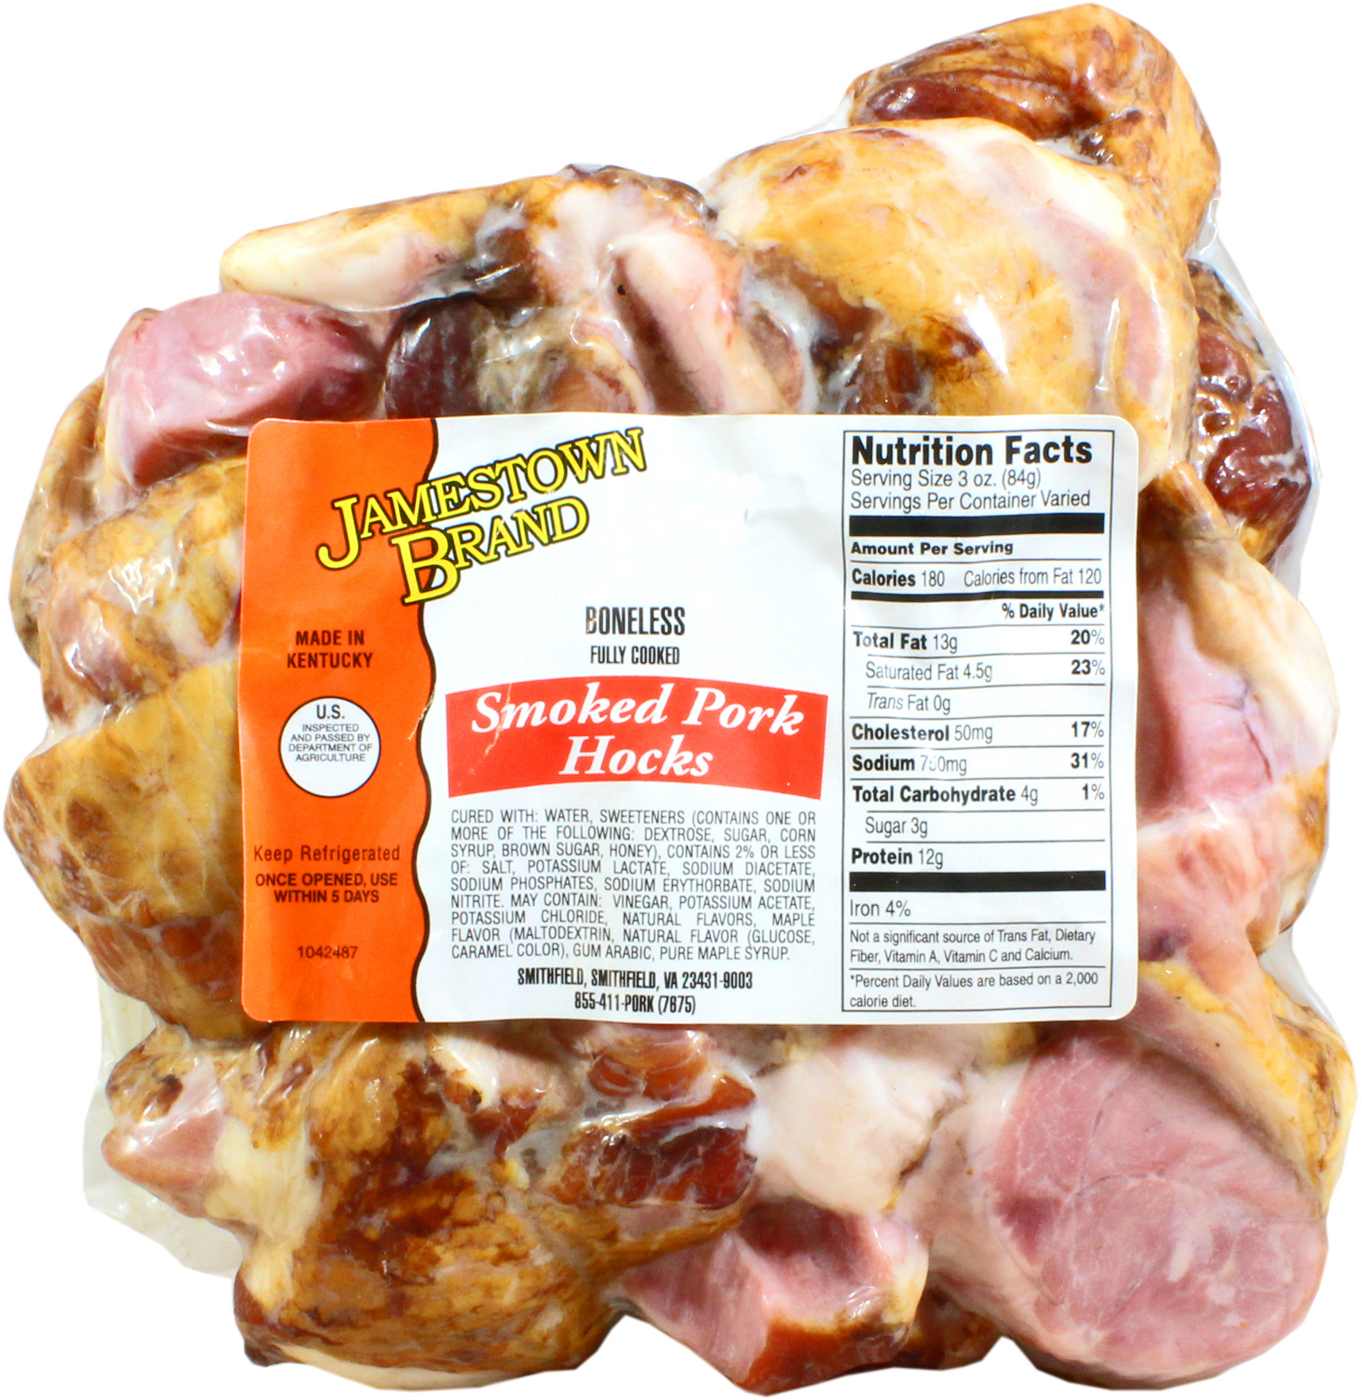 Jamestown Brand Fully Cooked Boneless Smoked Pork Hocks; image 1 of 2